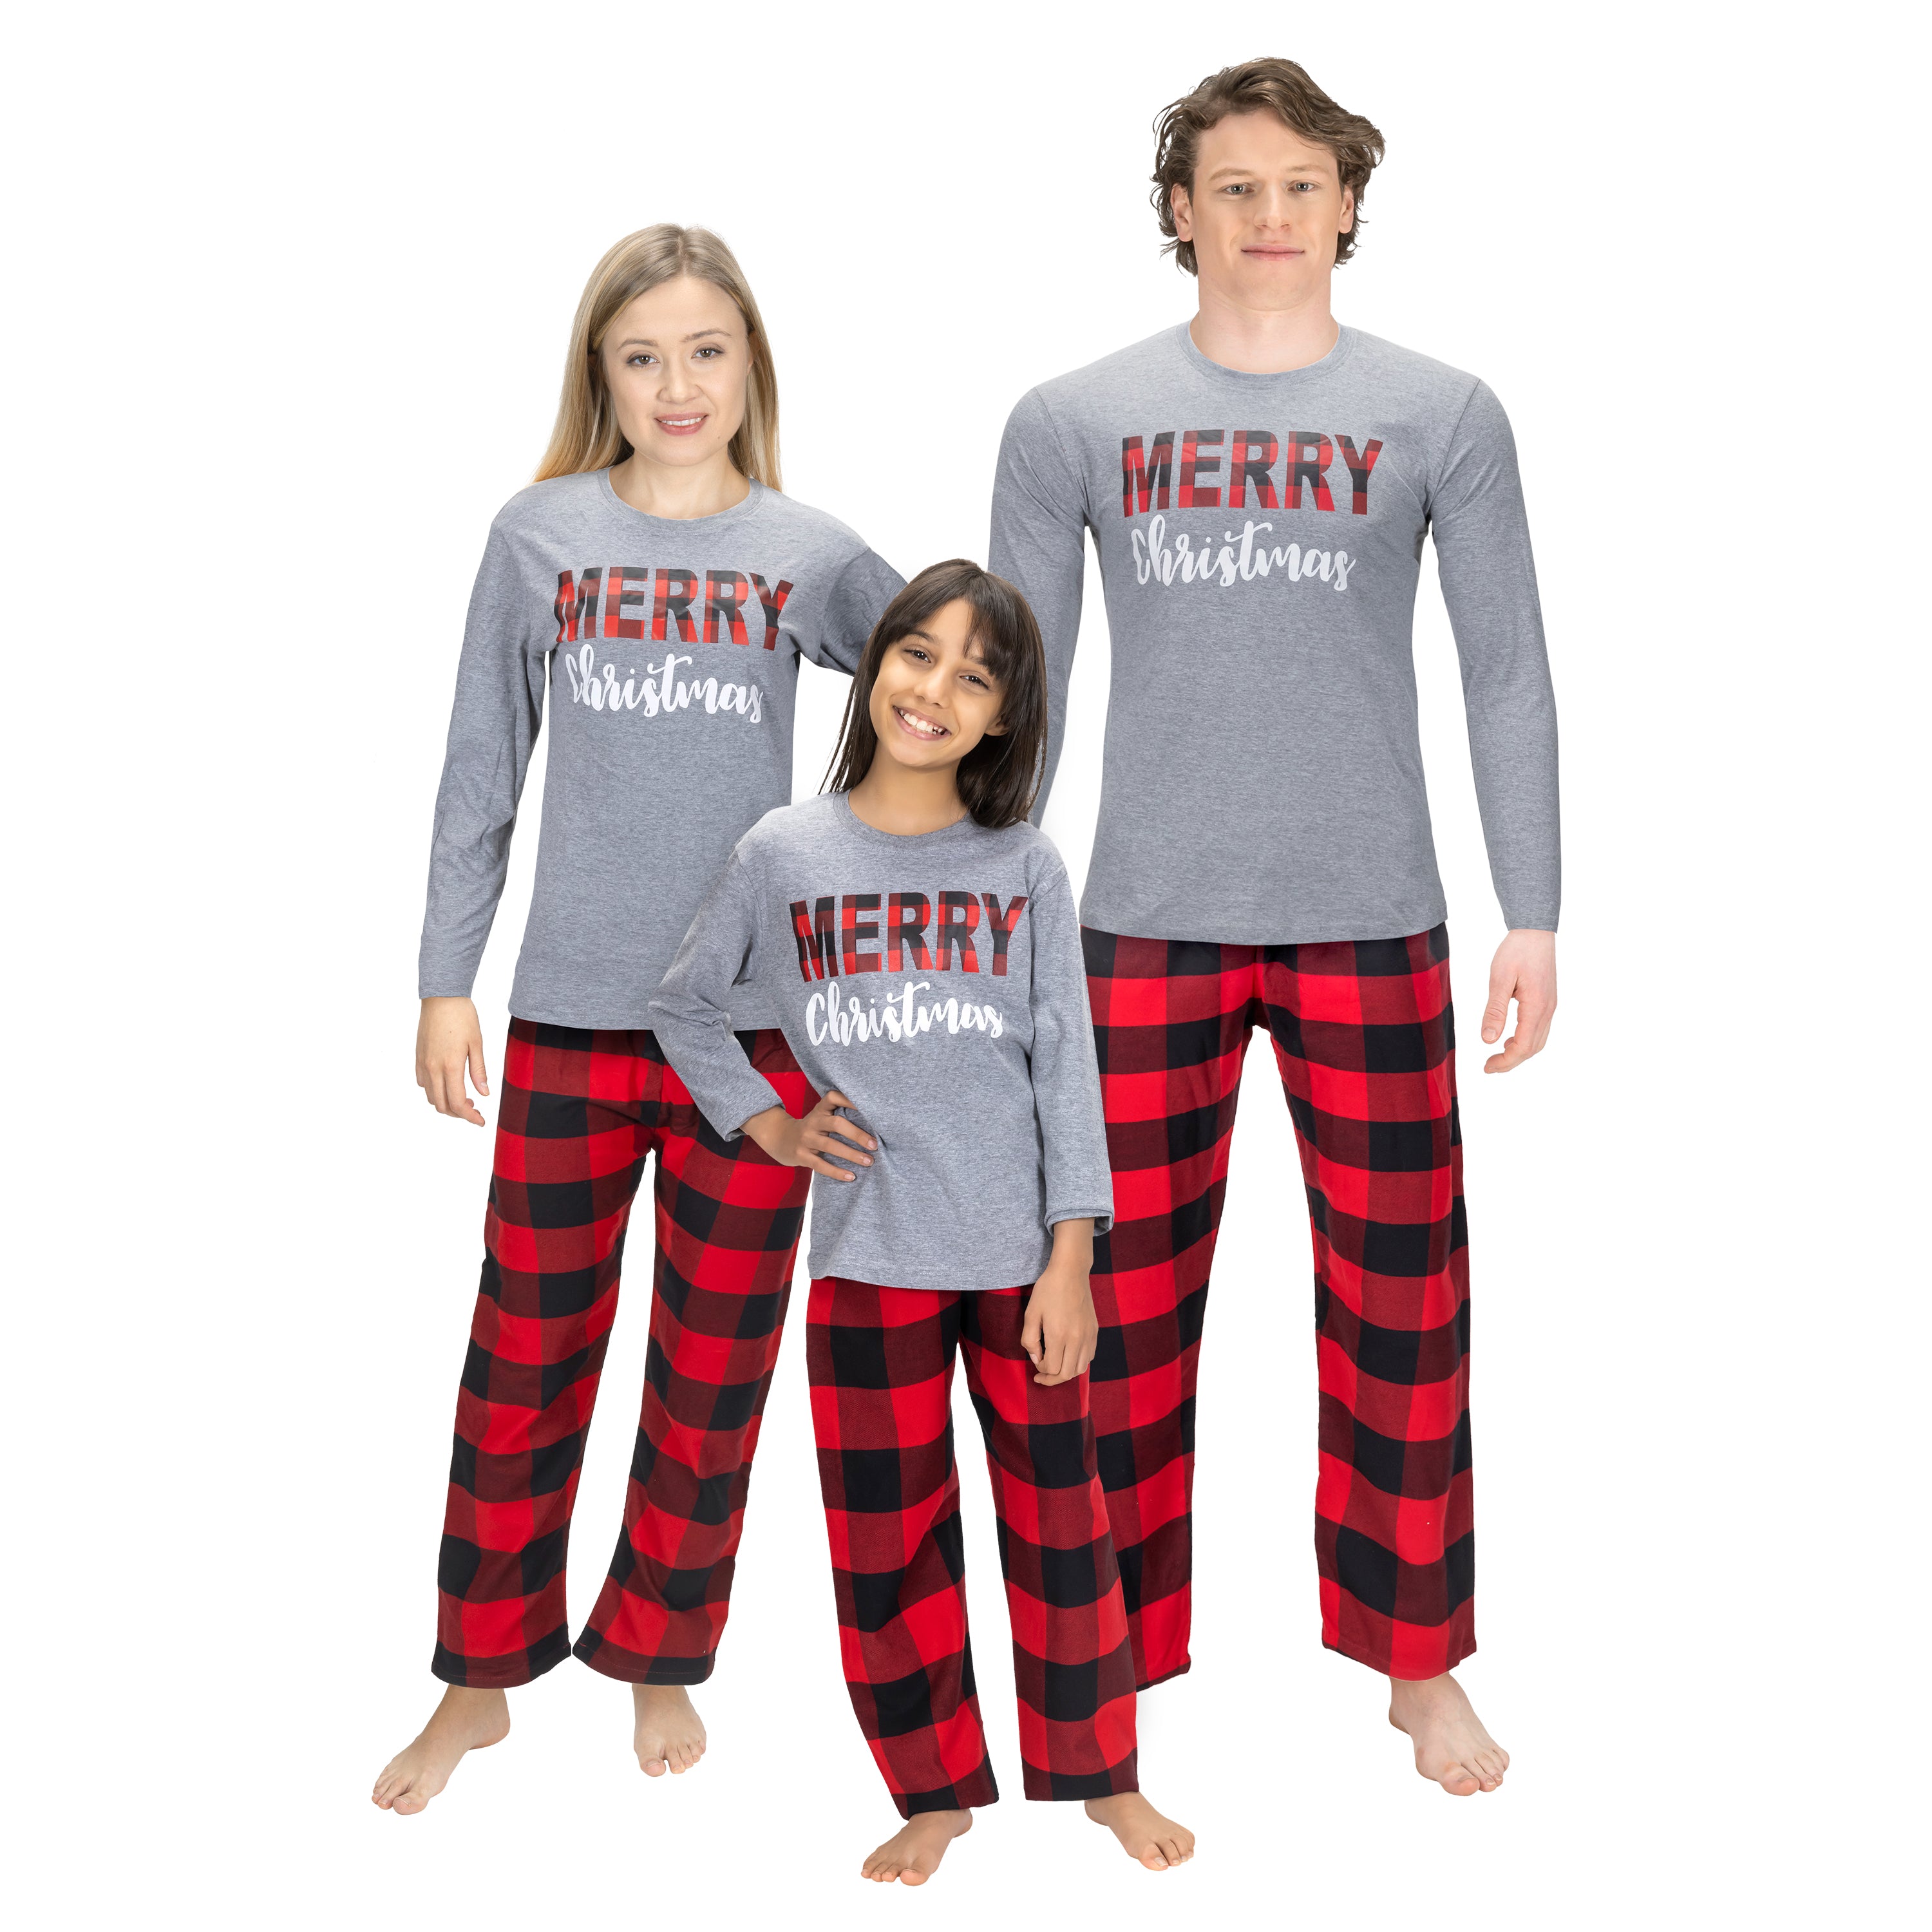 LFEOOST Matching Christmas Family Pajamas Sets Holiday Leopard Plaid  Christmas Tree Sleepwear Outfits Pijamas